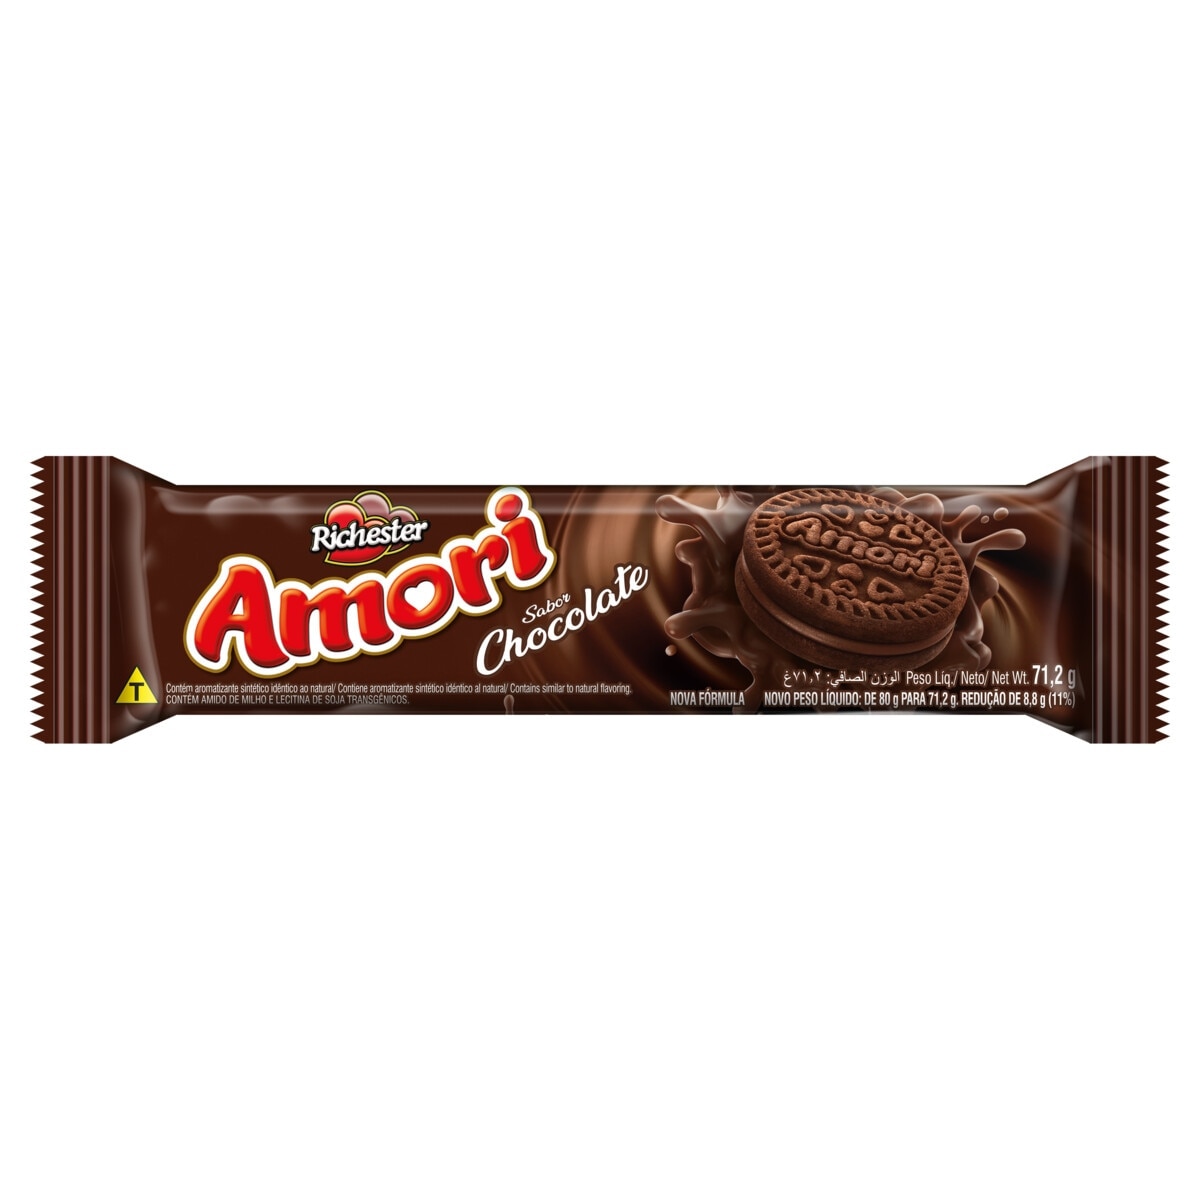 Biscoito Chocolate Recheio Richester Amori Pacote 71,2g